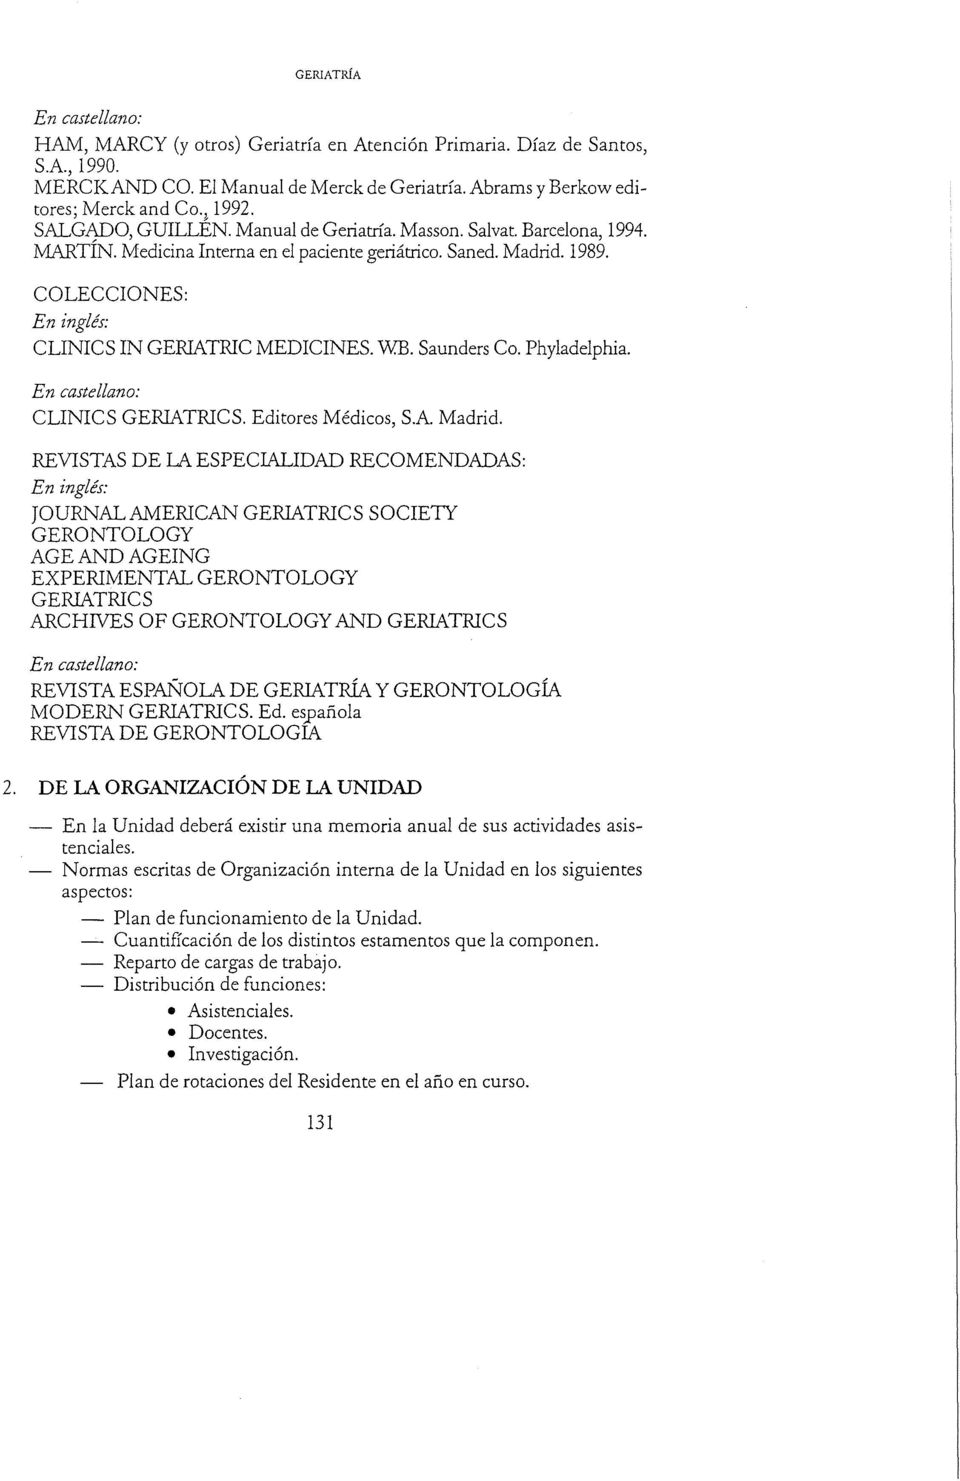 Saunders Co. Phyladelphia. CLINICS GERIATRICS. Editores Médicos, S.A. Madrid.